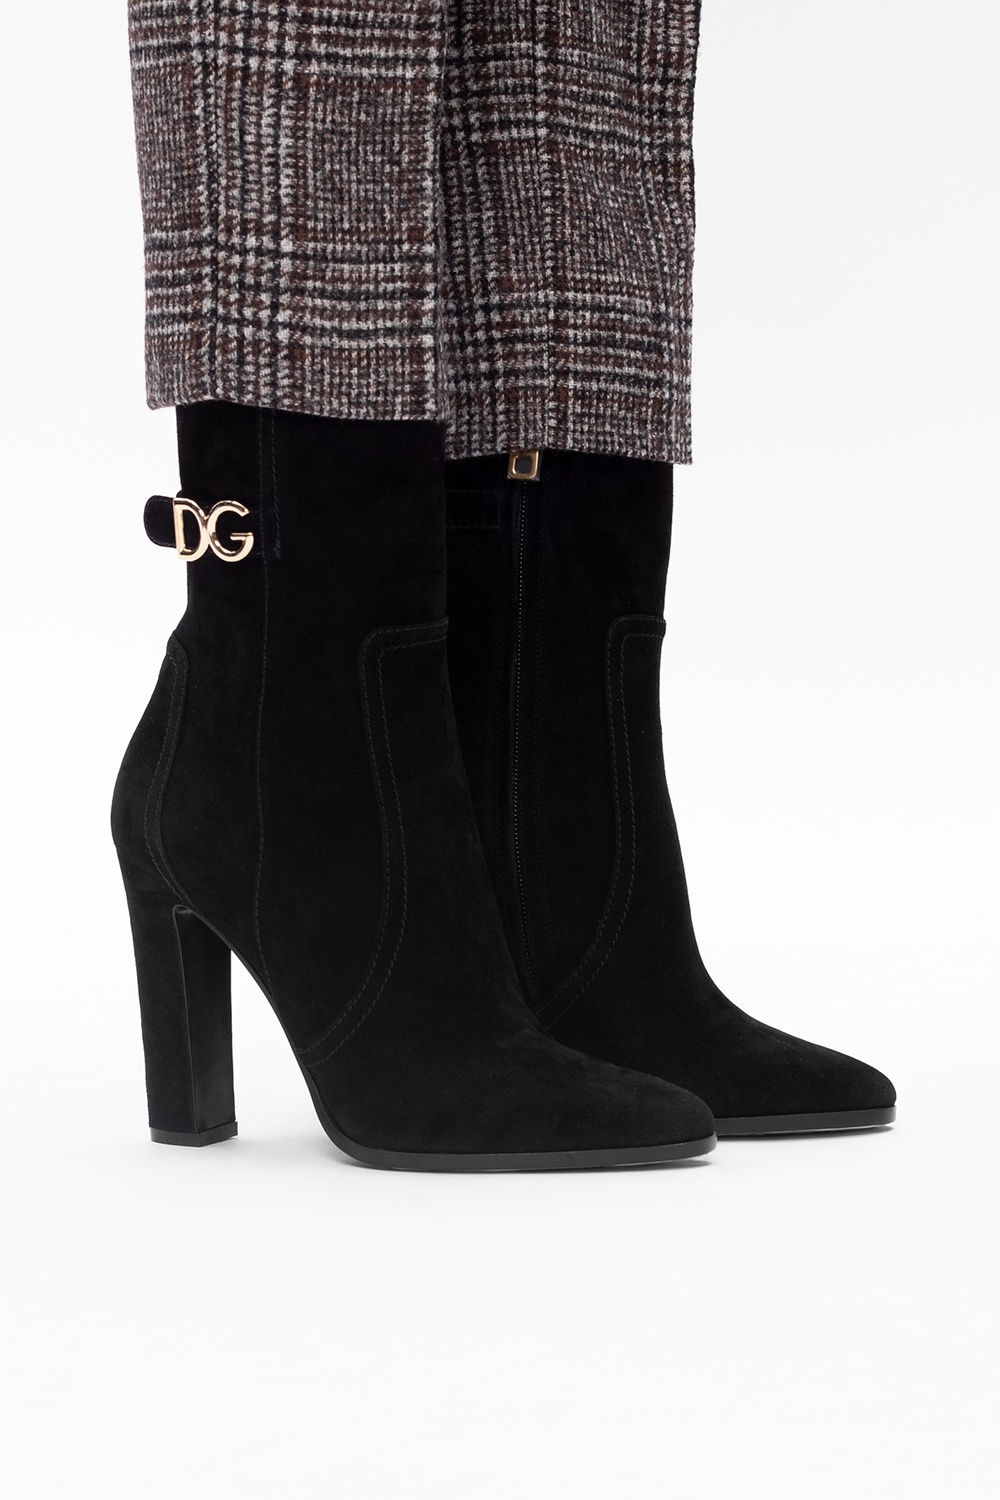 IetpShops | Dolce & Gabbana Men Iphone 7 8 Taske | Dolce & Gabbana 'Caroline' heeled ankle boots Women's Shoes